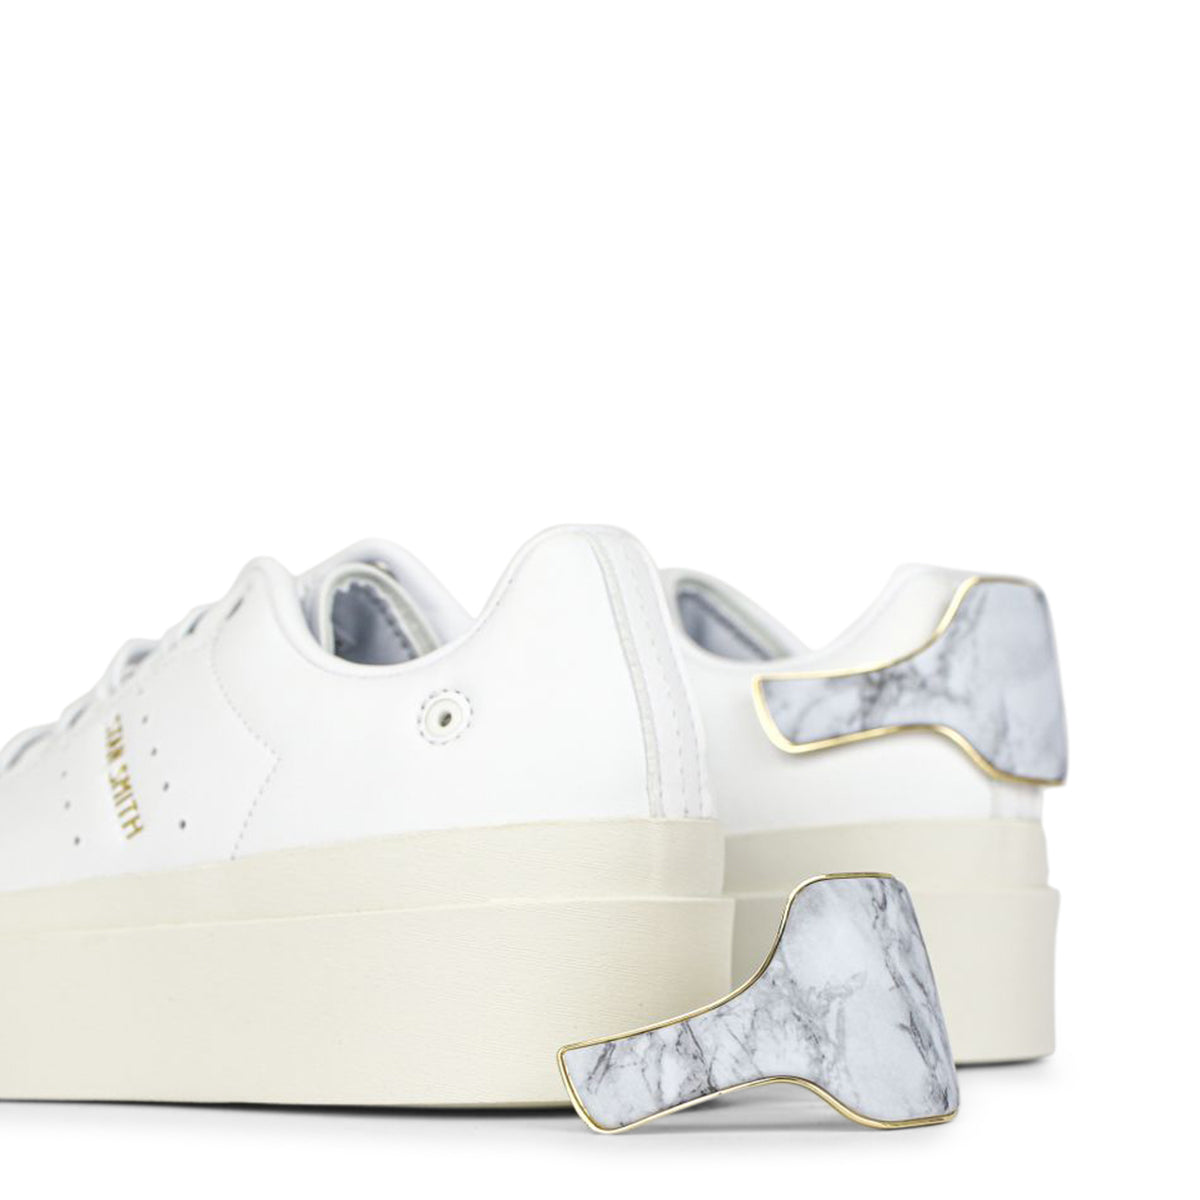 Adidas StanSmith Donna Bianco 130885. Colore: Bianco, Taglia: UK 6.5